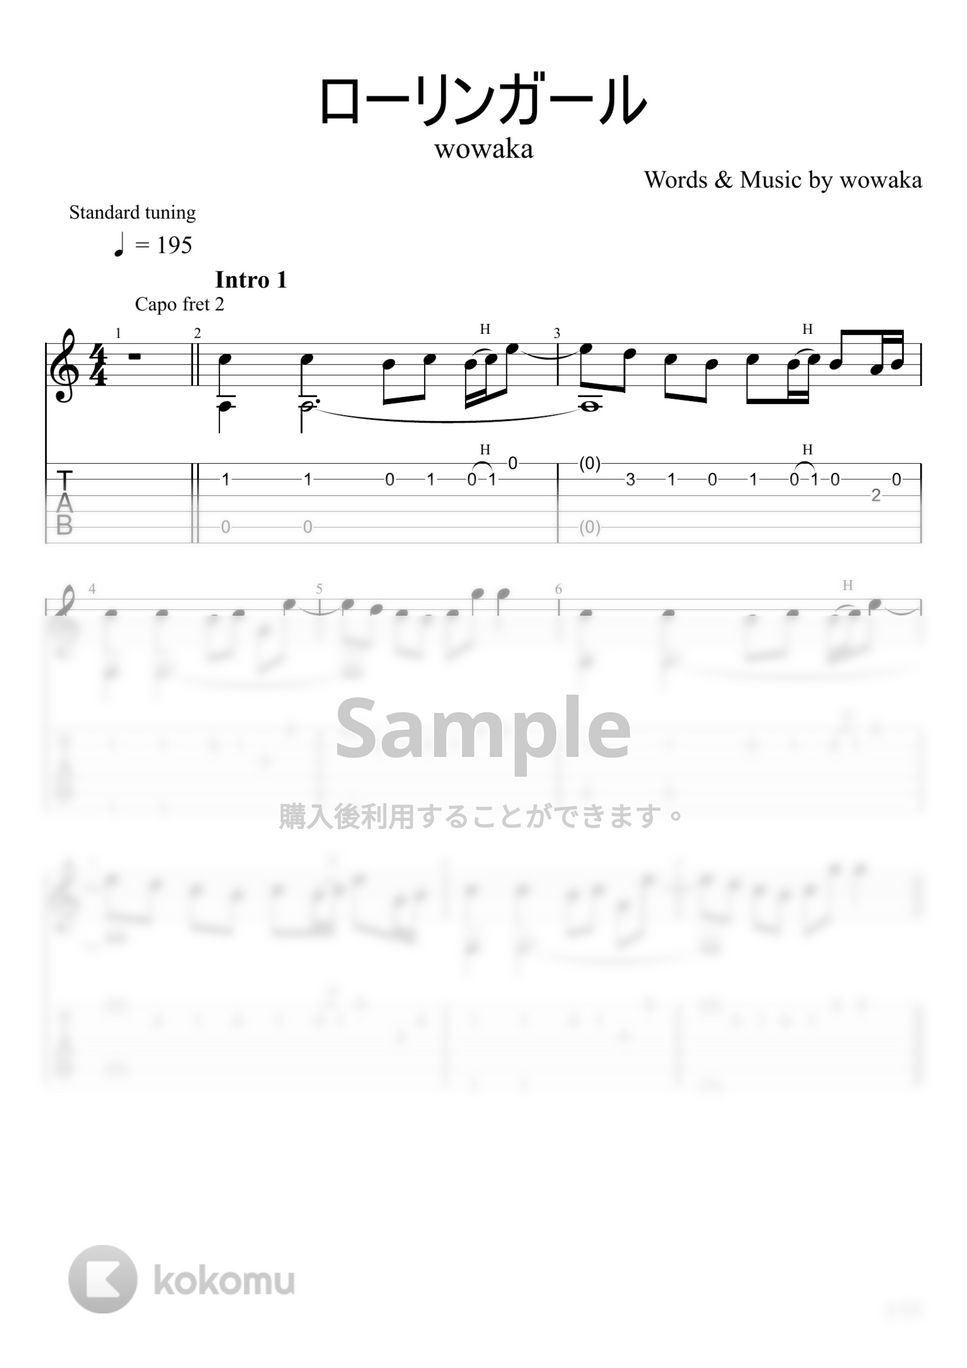 wowaka - ローリンガール (ソロギター) by u3danchou